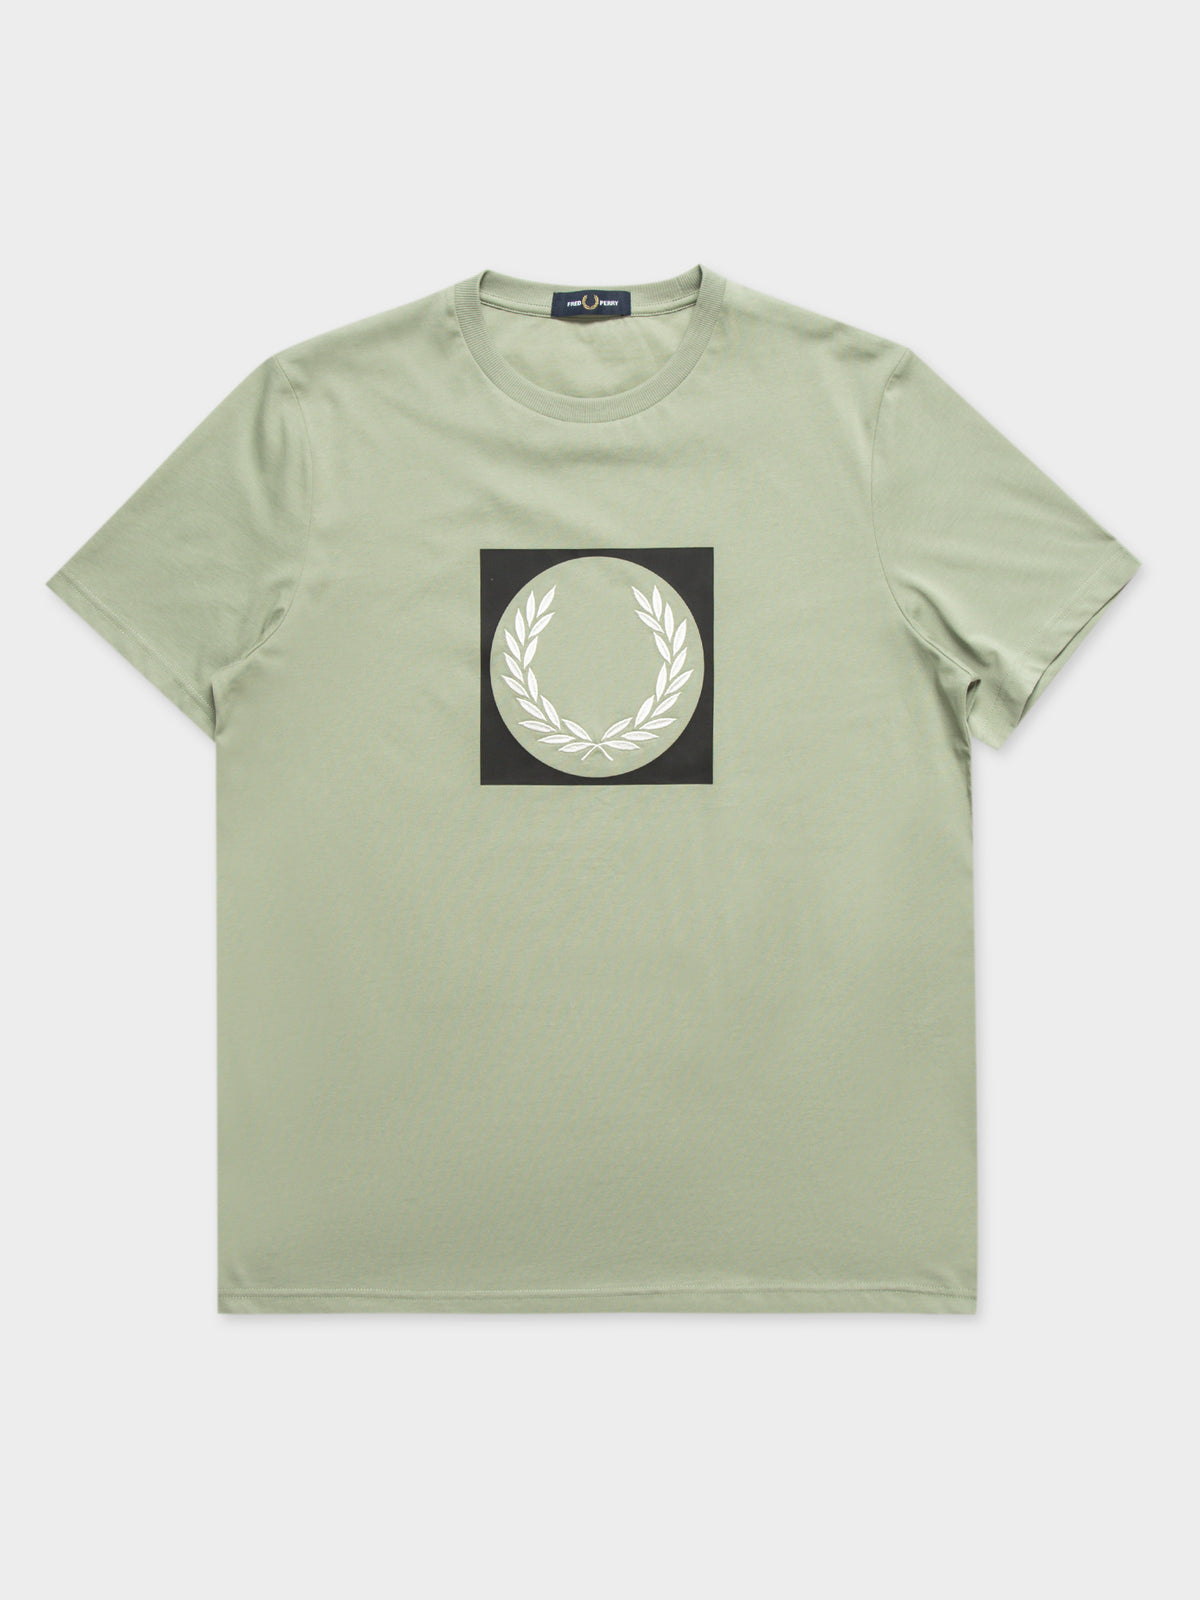 Laurel Wreath Graphic T-Shirt in Green